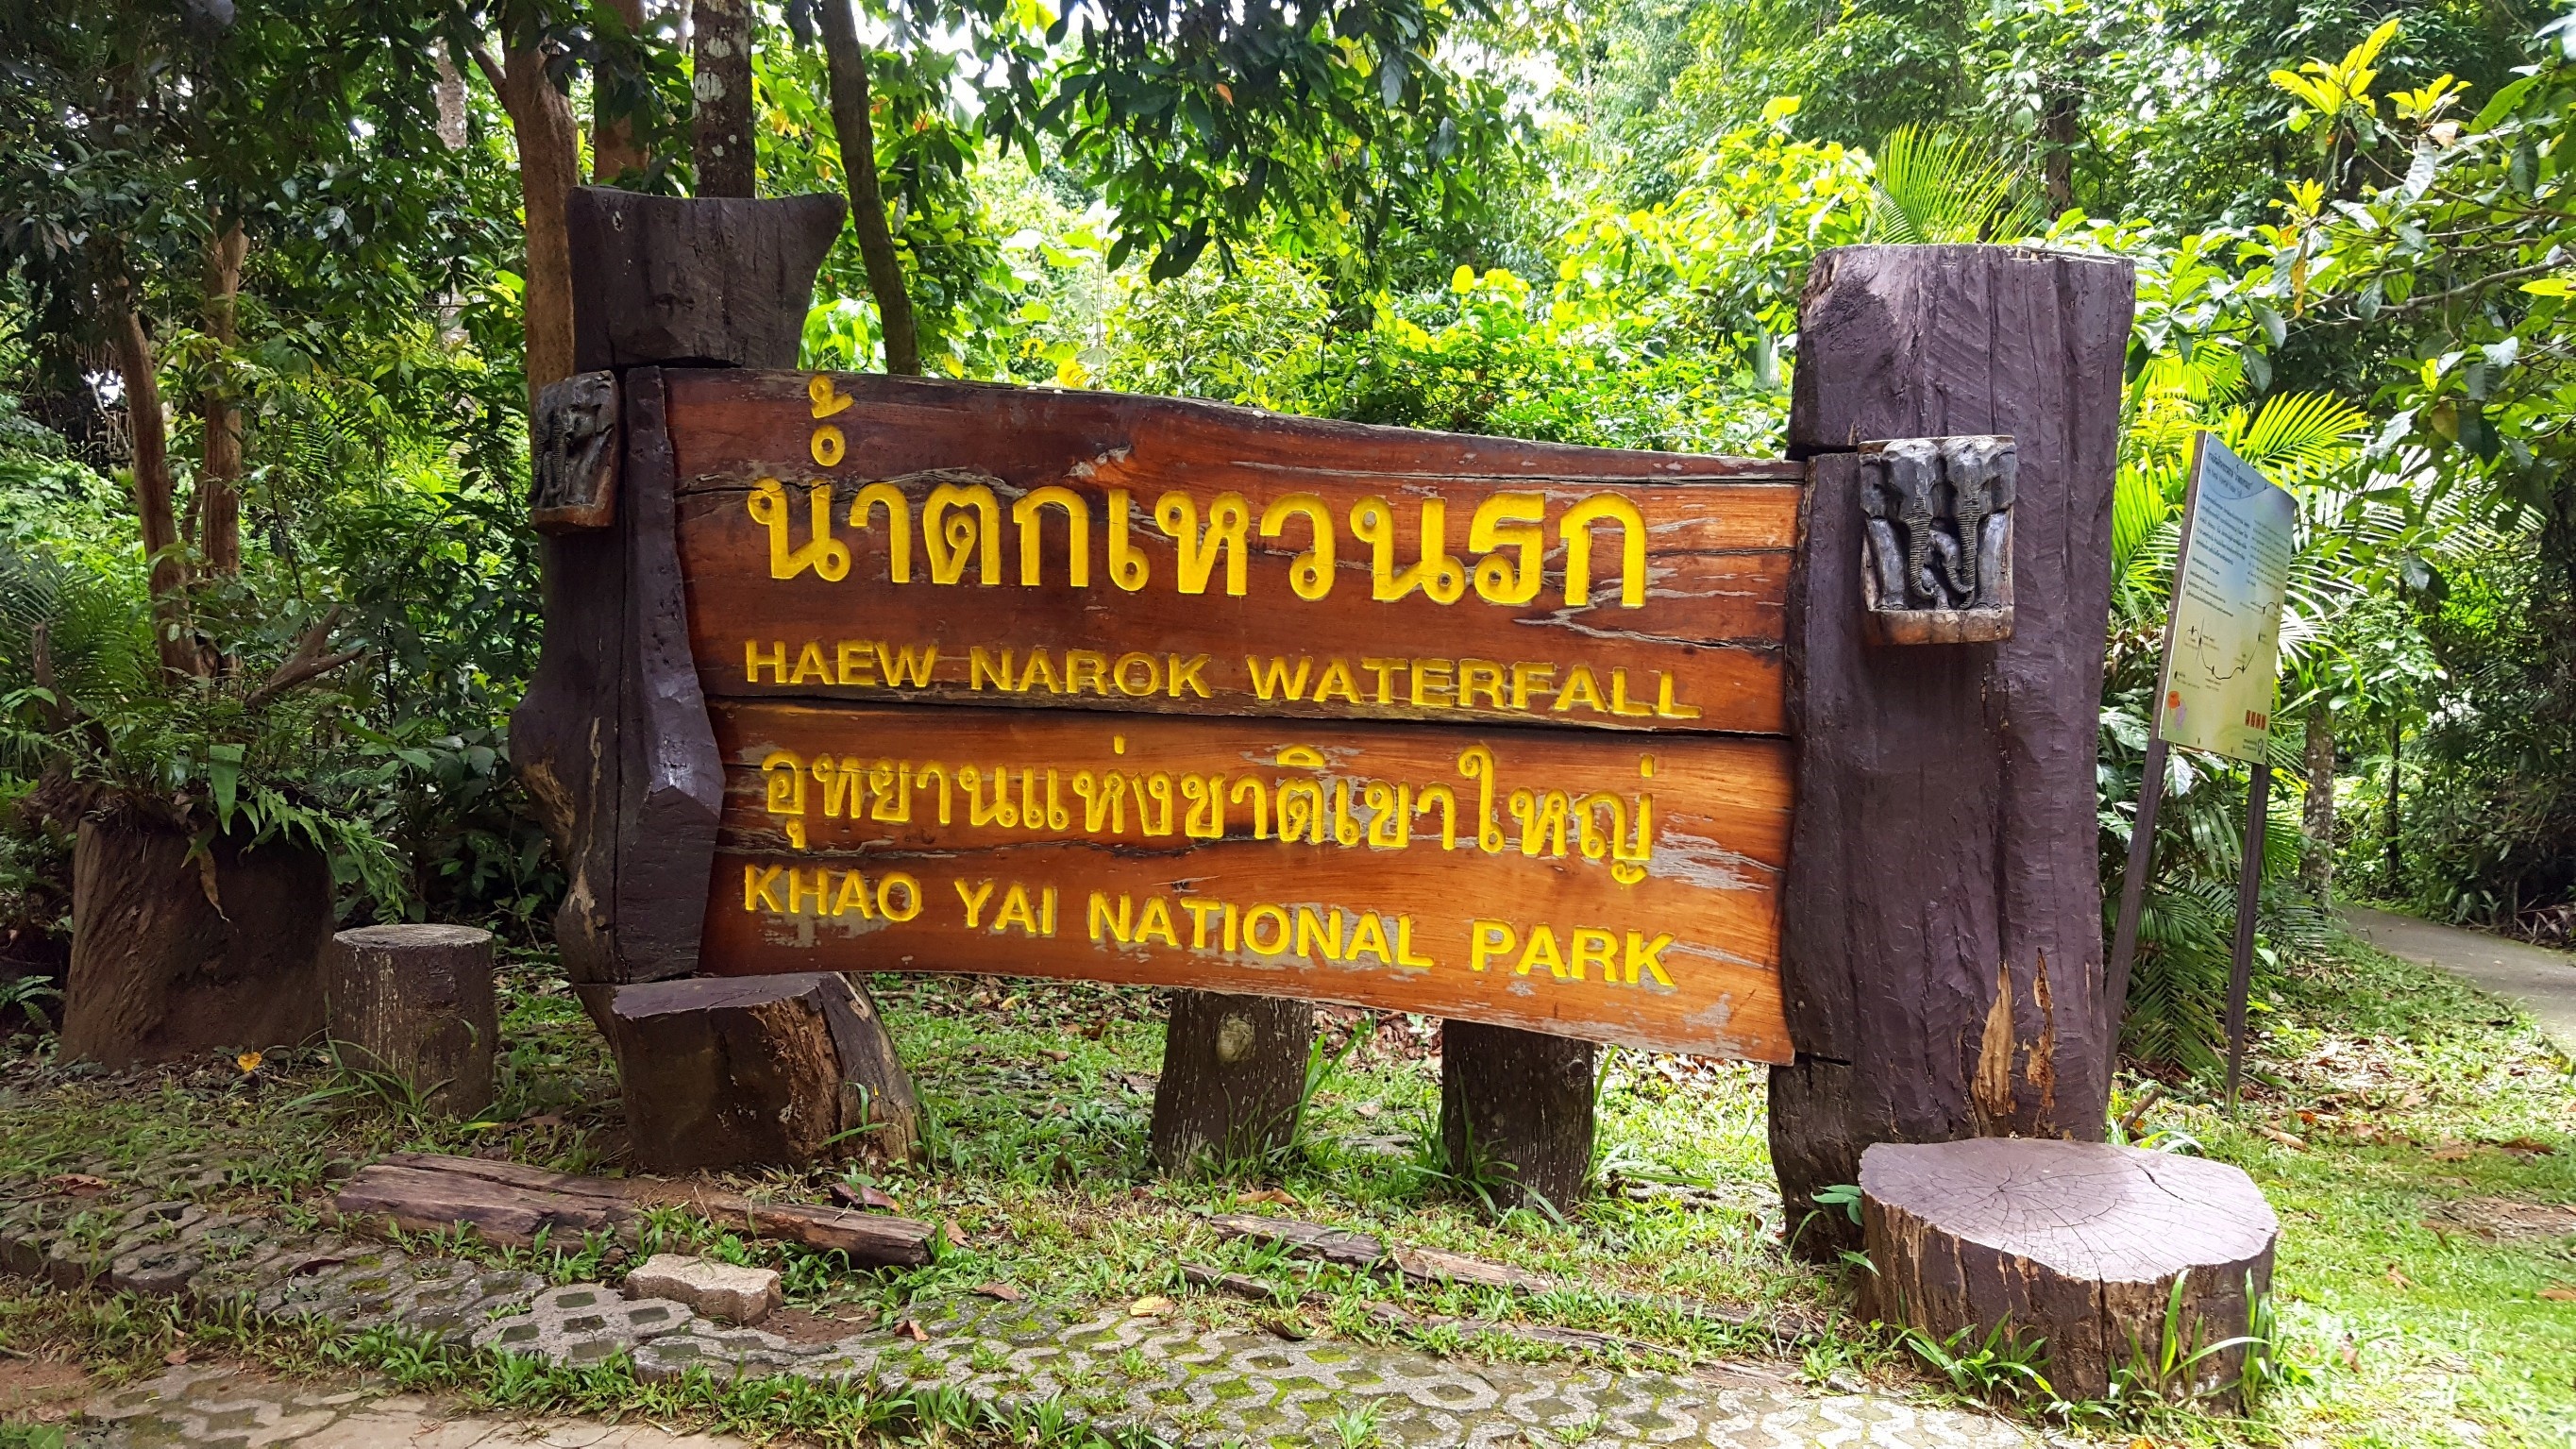 Khao Yai National Park, Haew Narok waterfall, Pristine nature, National park gem, 2730x1540 HD Desktop